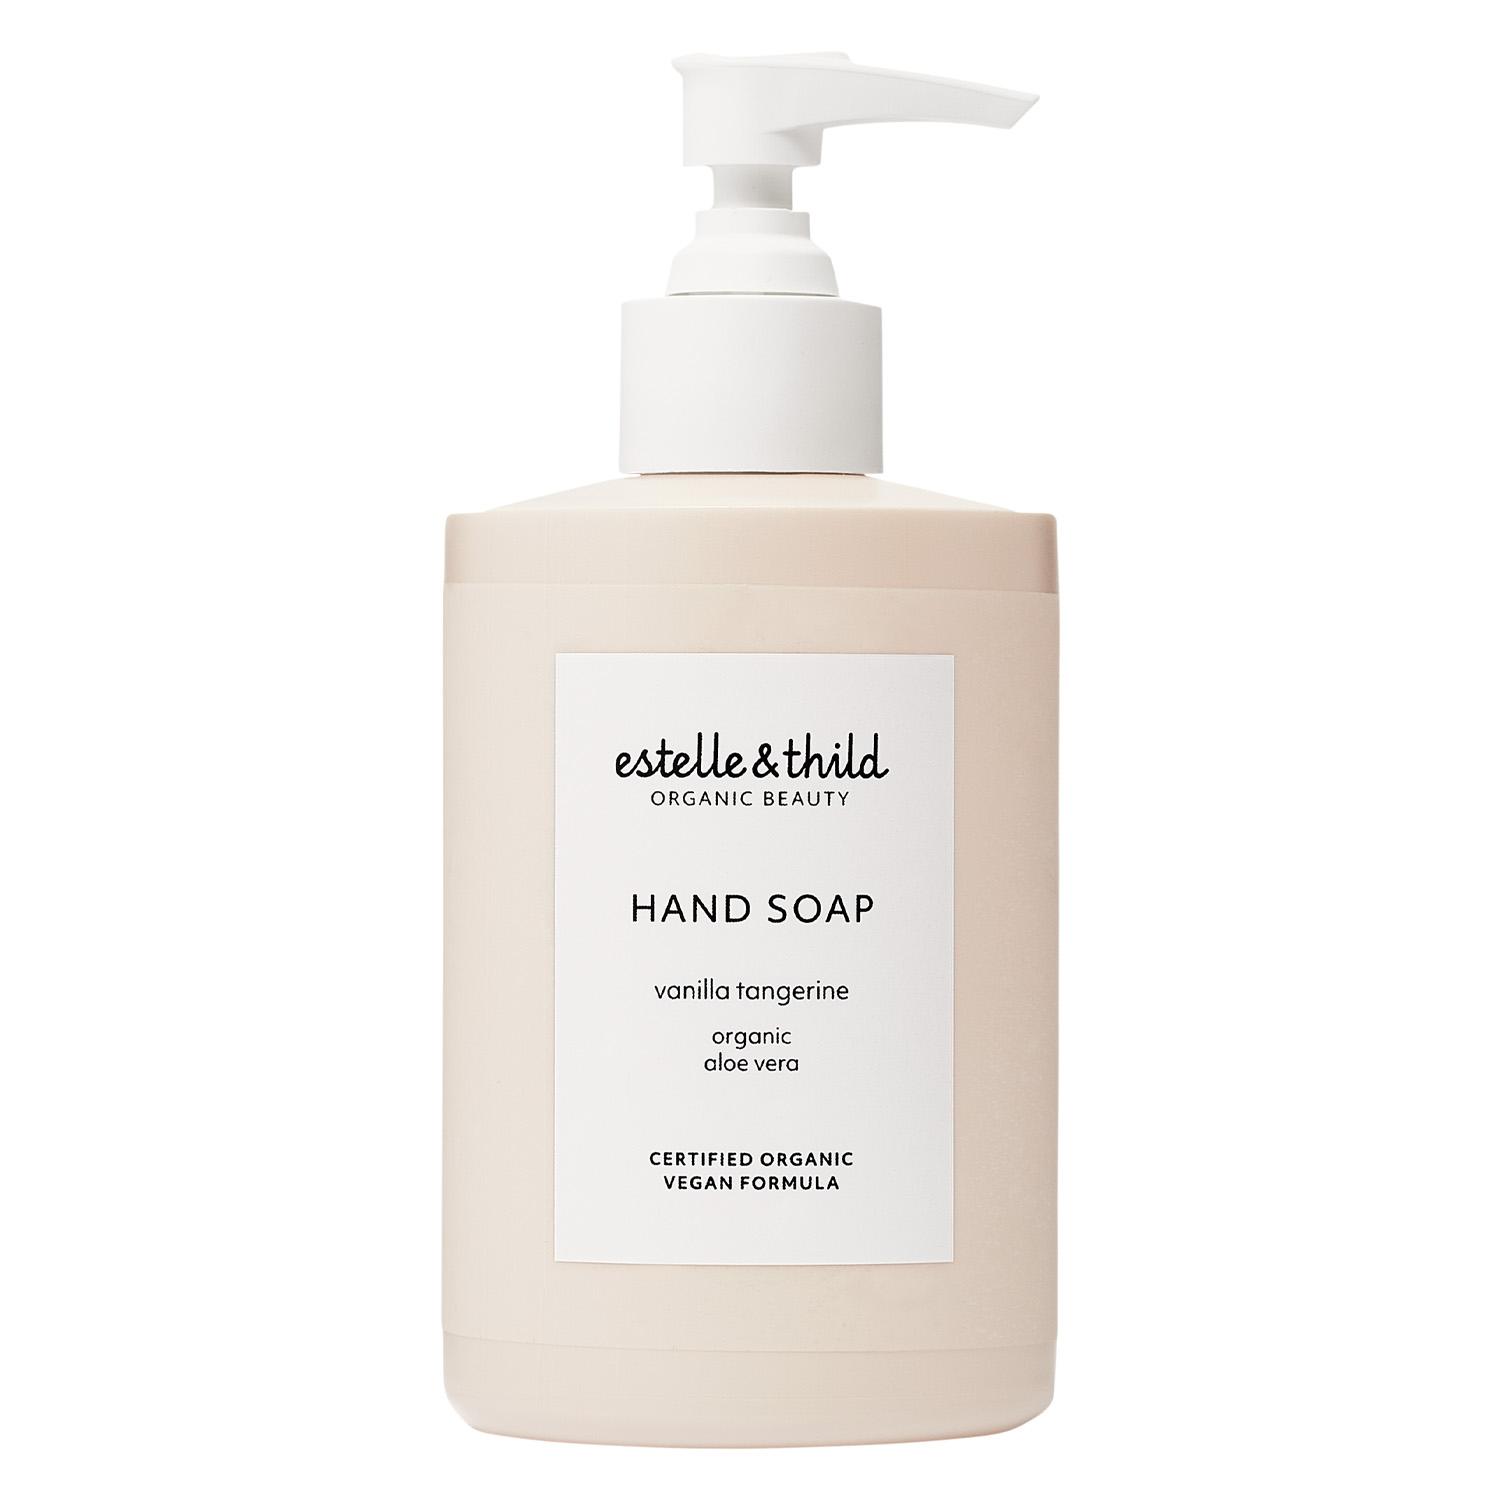 Estelle&Thild Care - Hand Soap Vanilla Tangerine